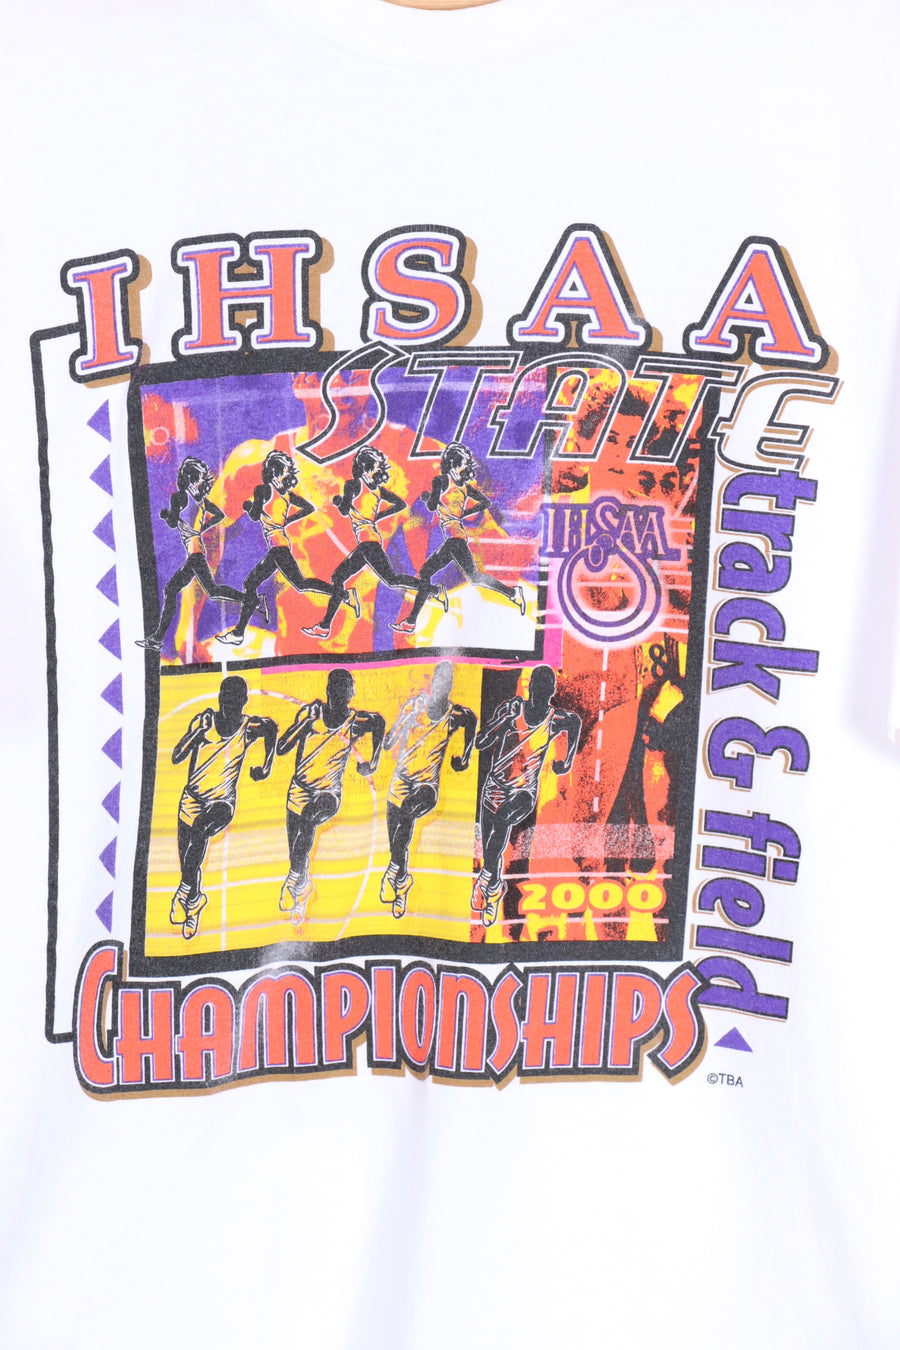 2000 Vintage IHSAA State Champion Track & Field Print Tee (M-L)